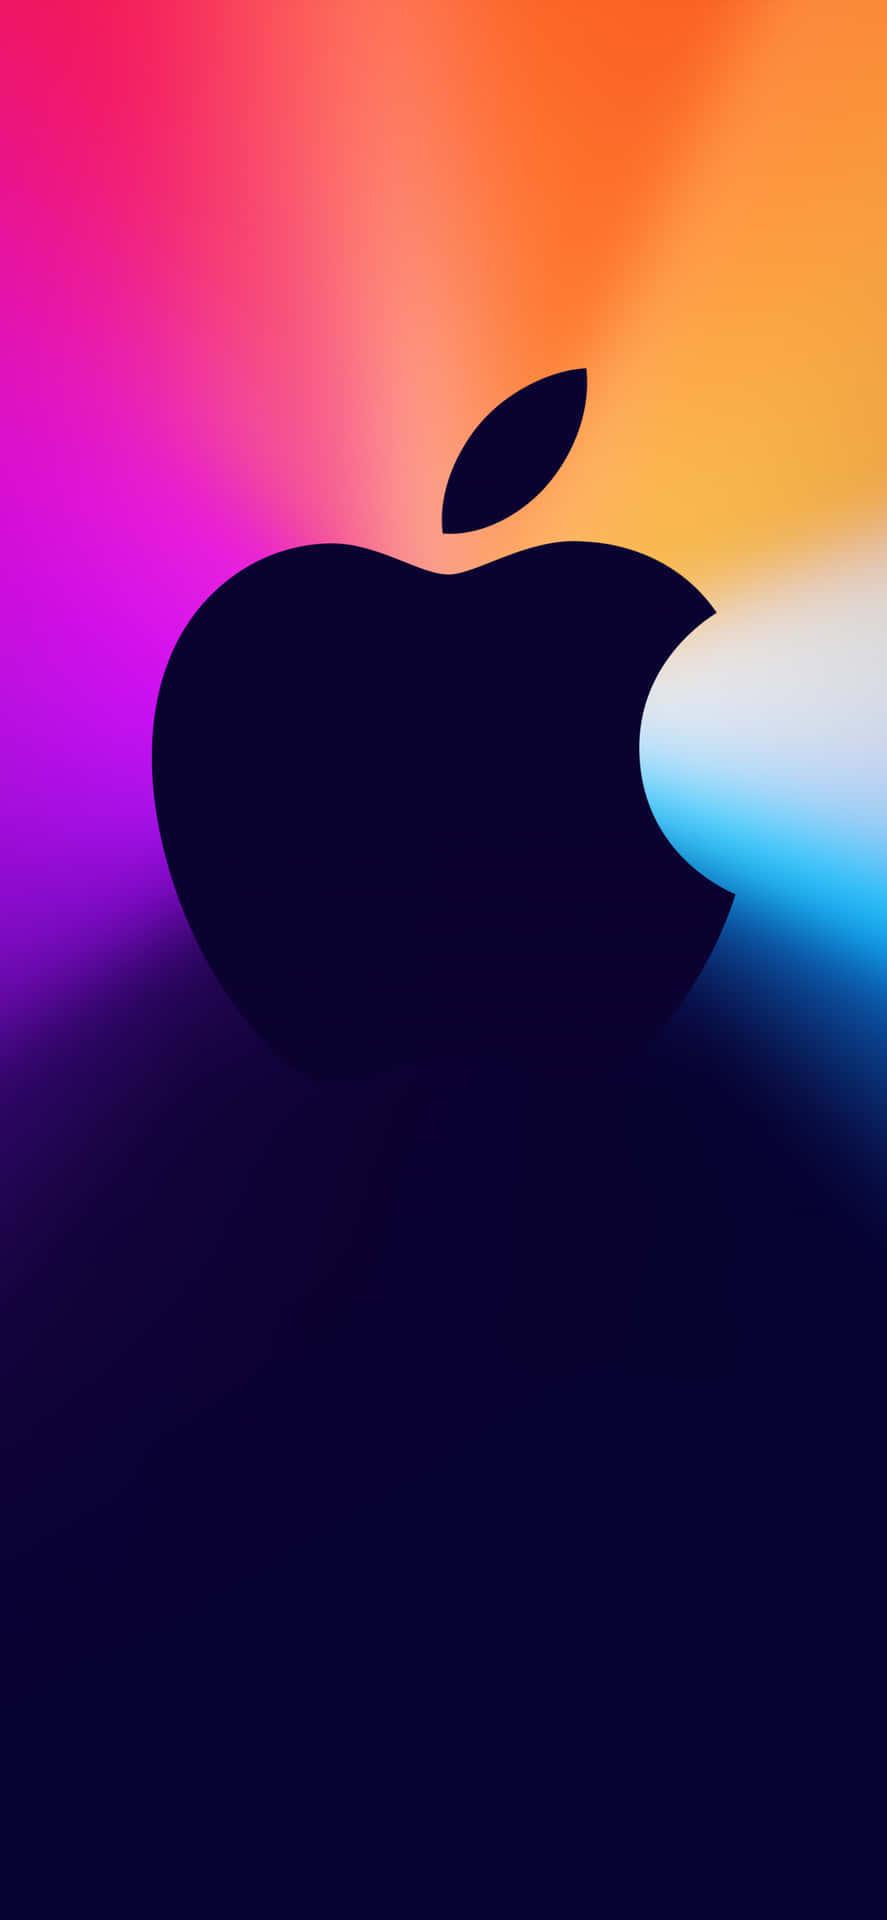 Beleuchtetesapple-logo Auf Dem Iphone X Wallpaper